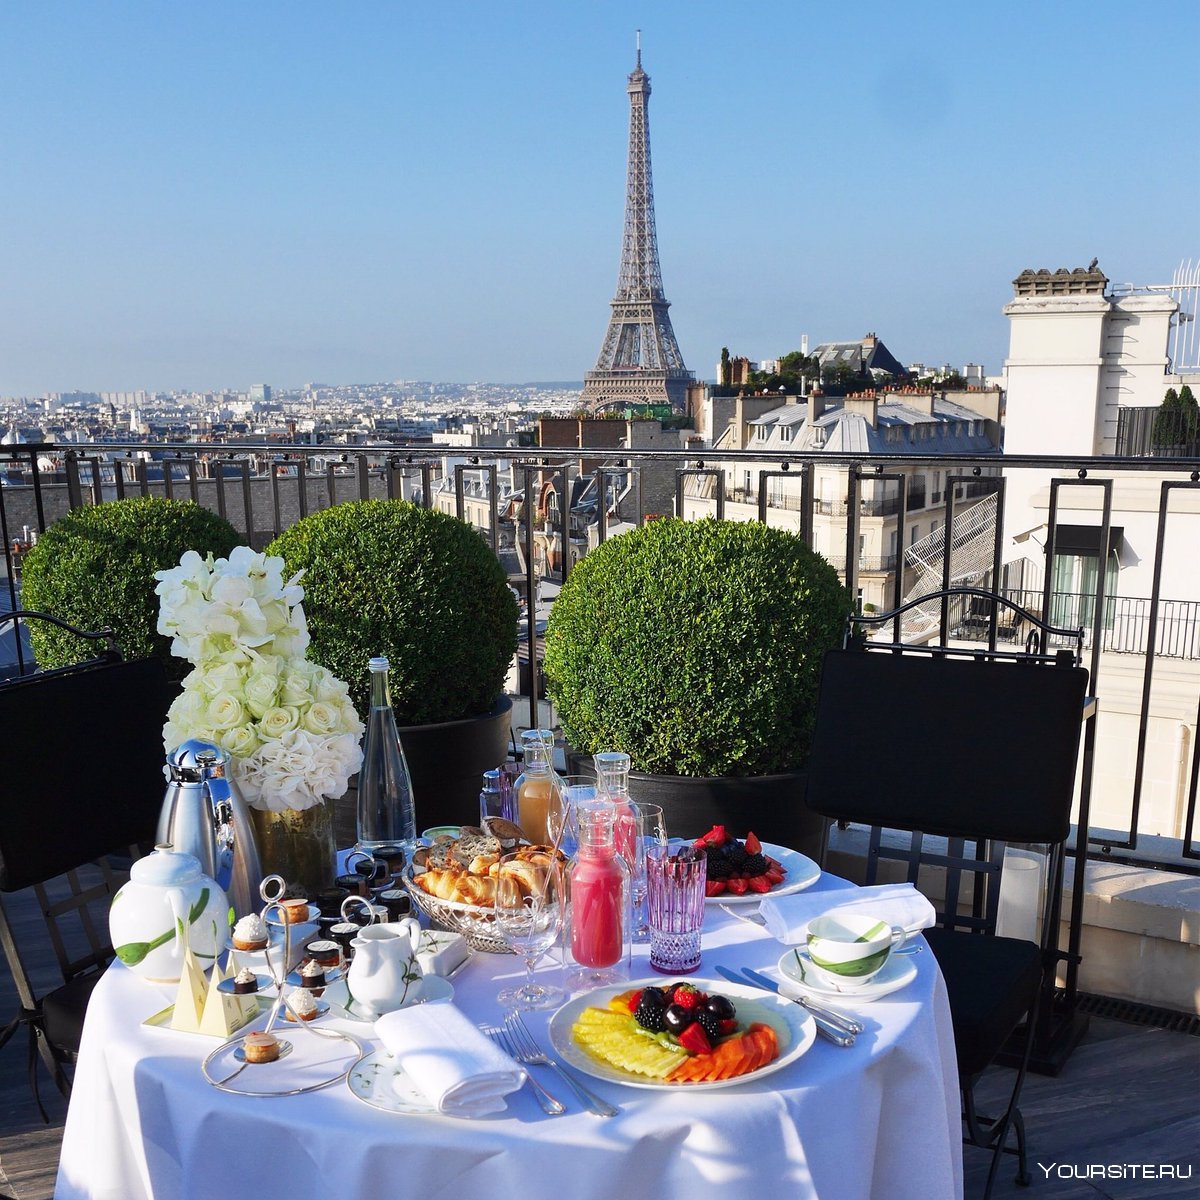 Завтрак в париже